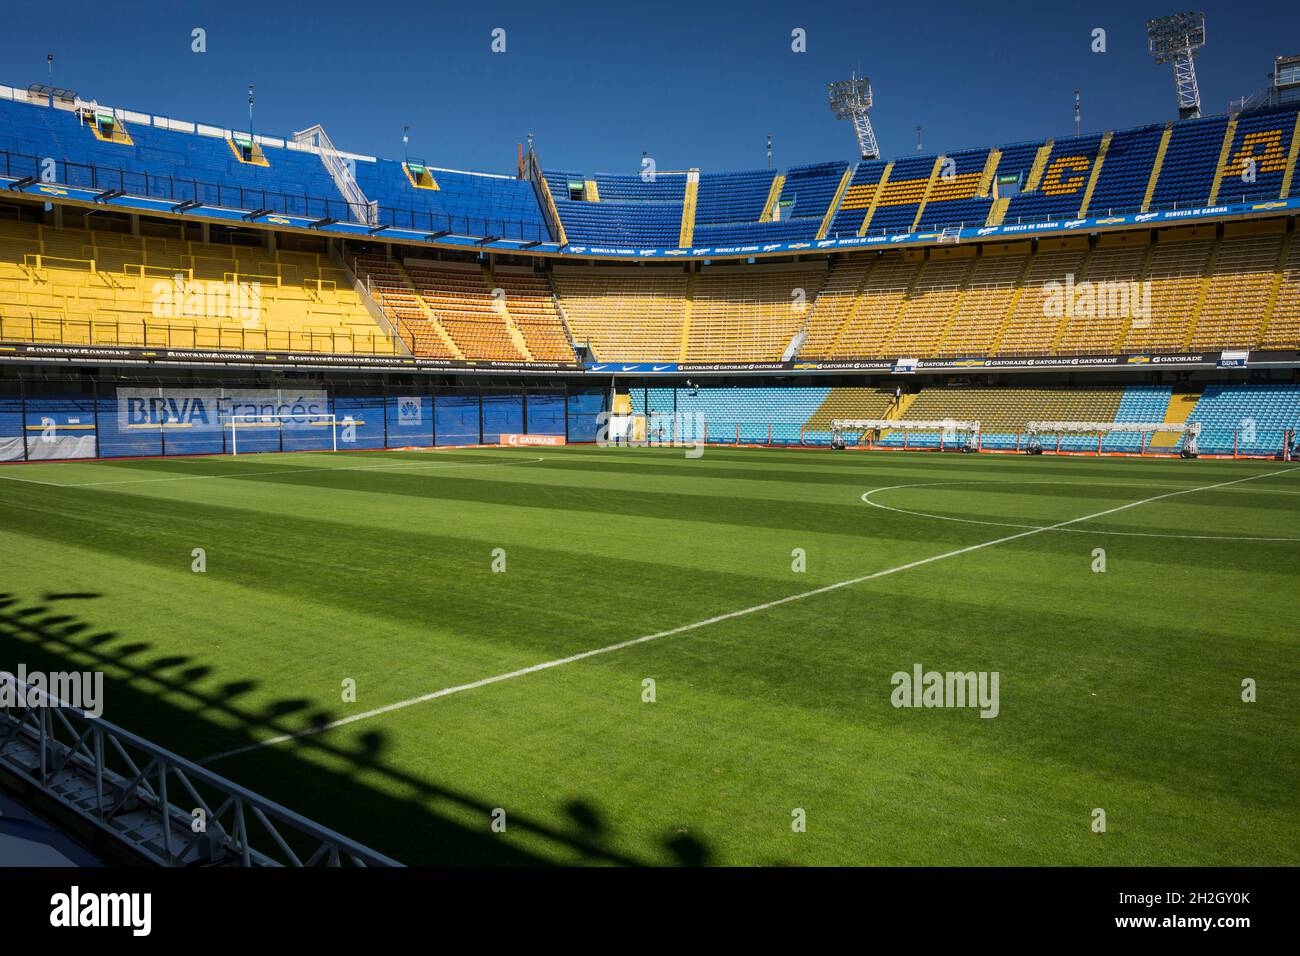 Horizontal lateral view of La Bombonera field (Boca Juniors soccer field) and stands, La Boca neighborhood, Buenos Aires, Argentina Stock Photo